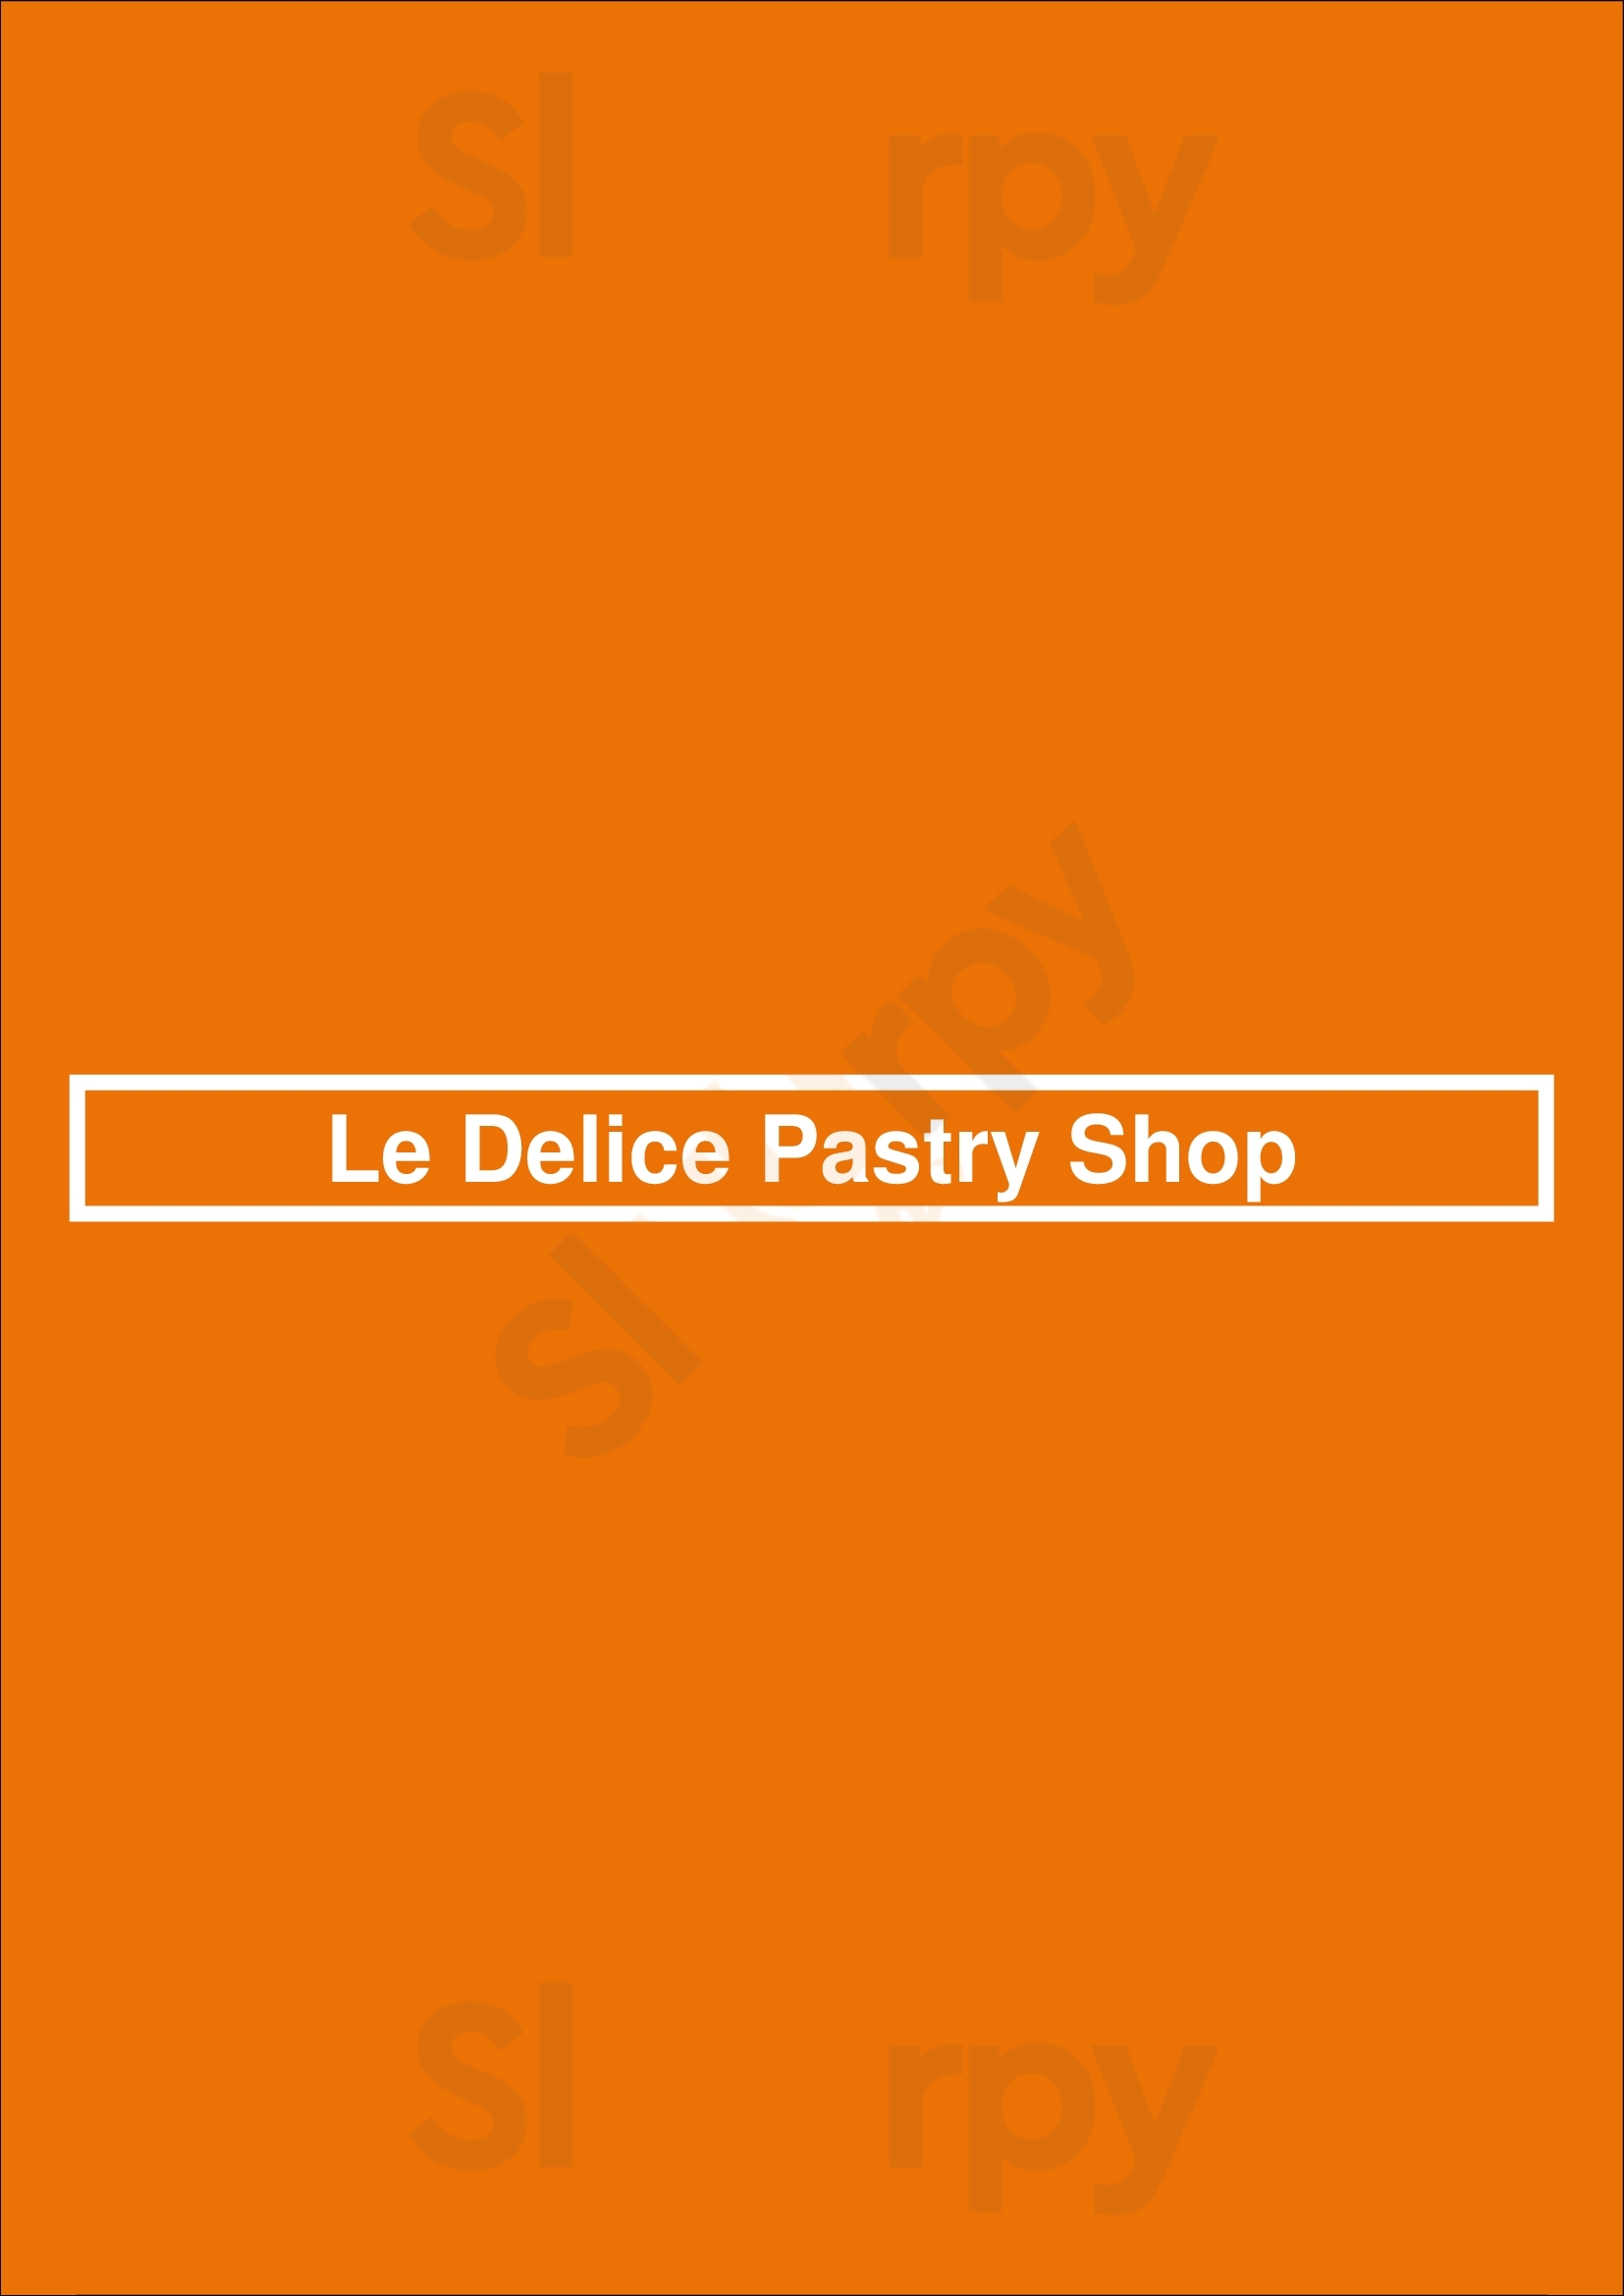 Le Delice Pastry Shop Mississauga Menu - 1